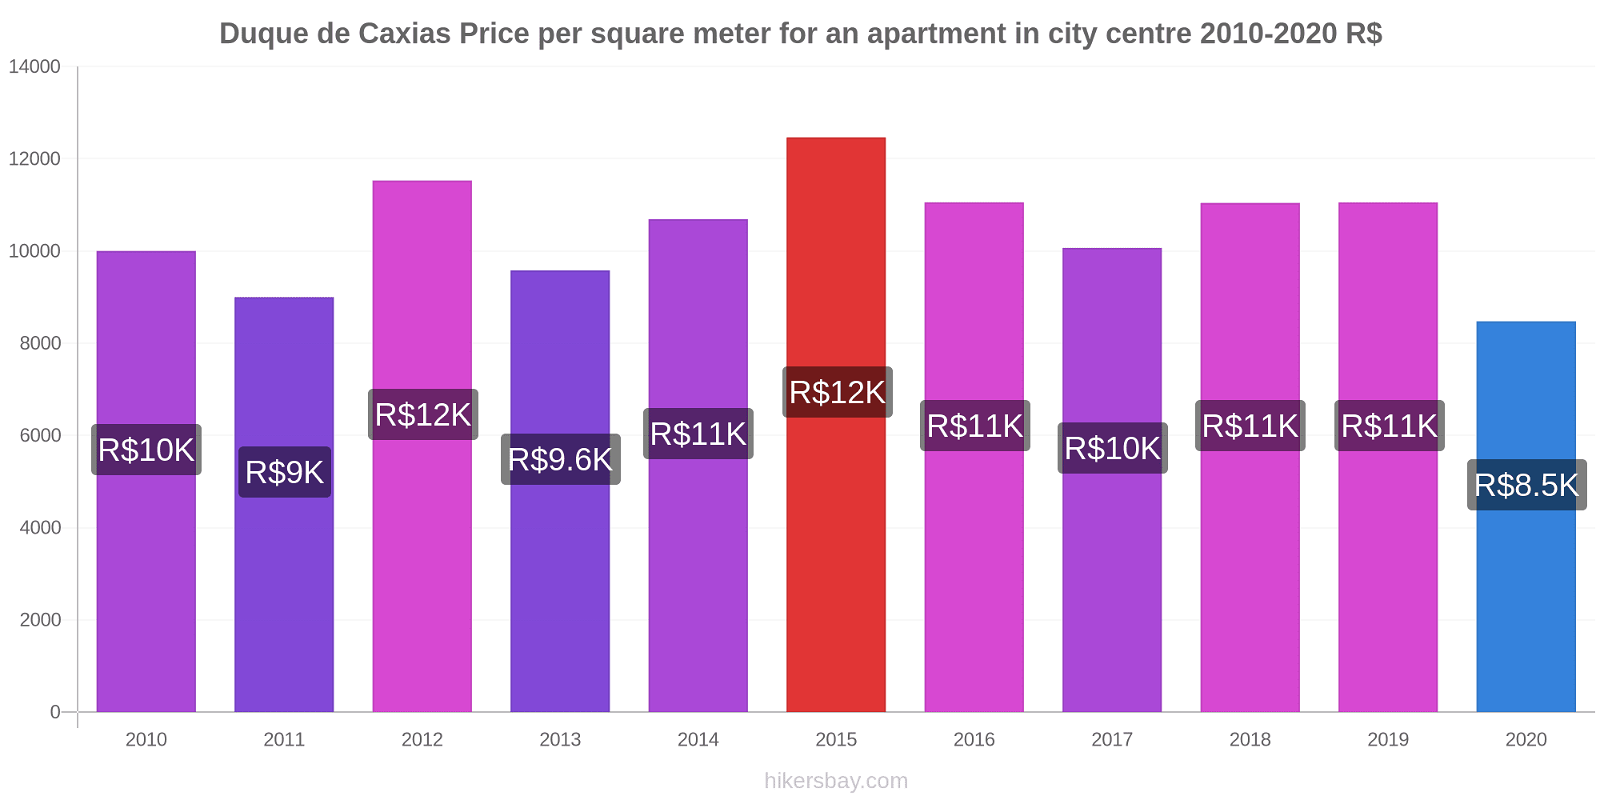 Duque de Caxias price changes Price per square meter for an apartment in city centre hikersbay.com